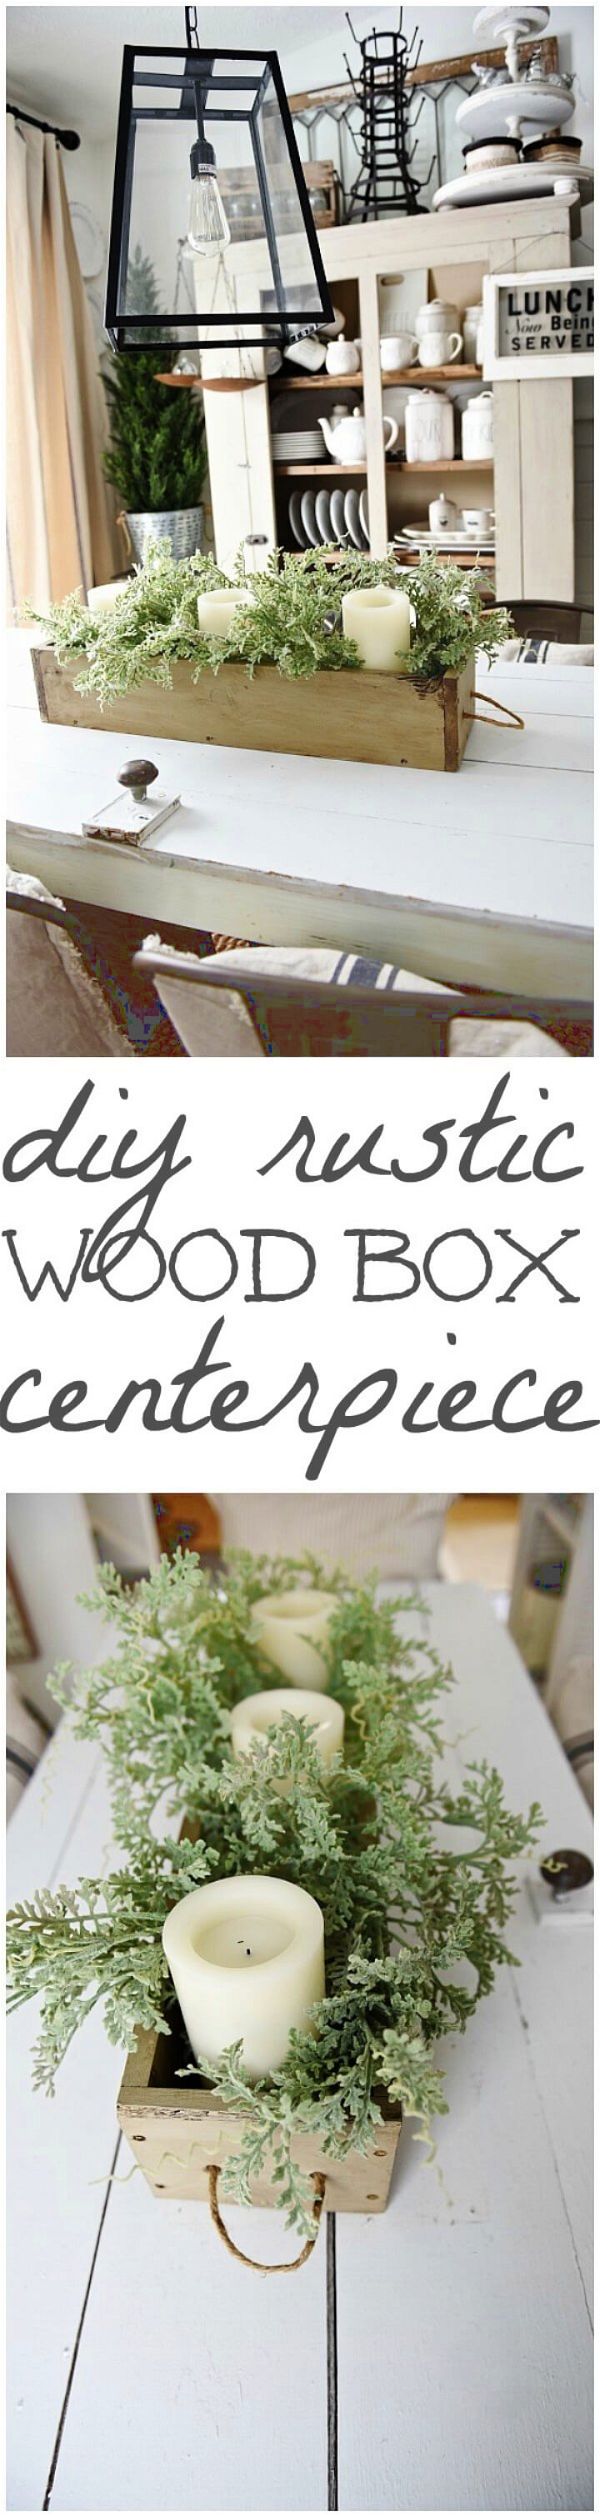 DIY RUSTIC WOOD BOX CENTERPIECE